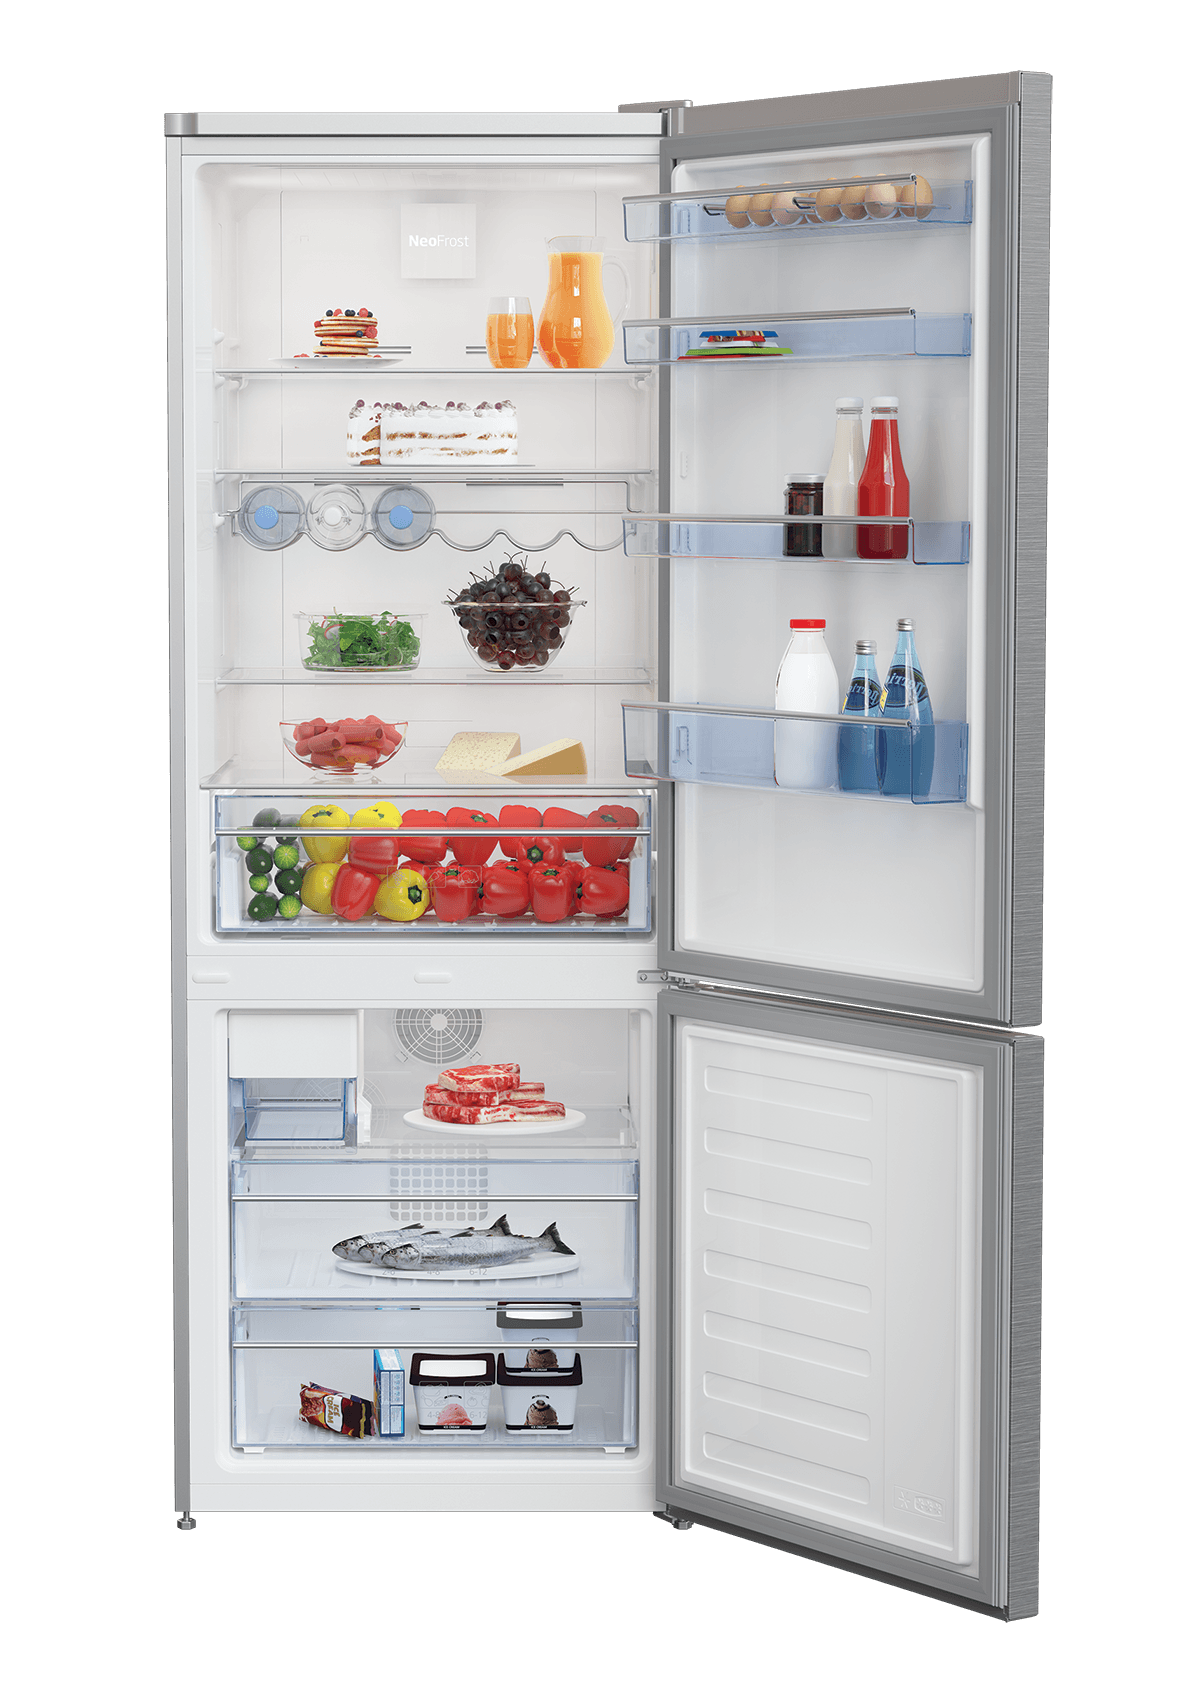 Beko BFBF2715SSIM 27" Freezer Bottom Stainless Steel Refrigerator With Auto Ice Maker